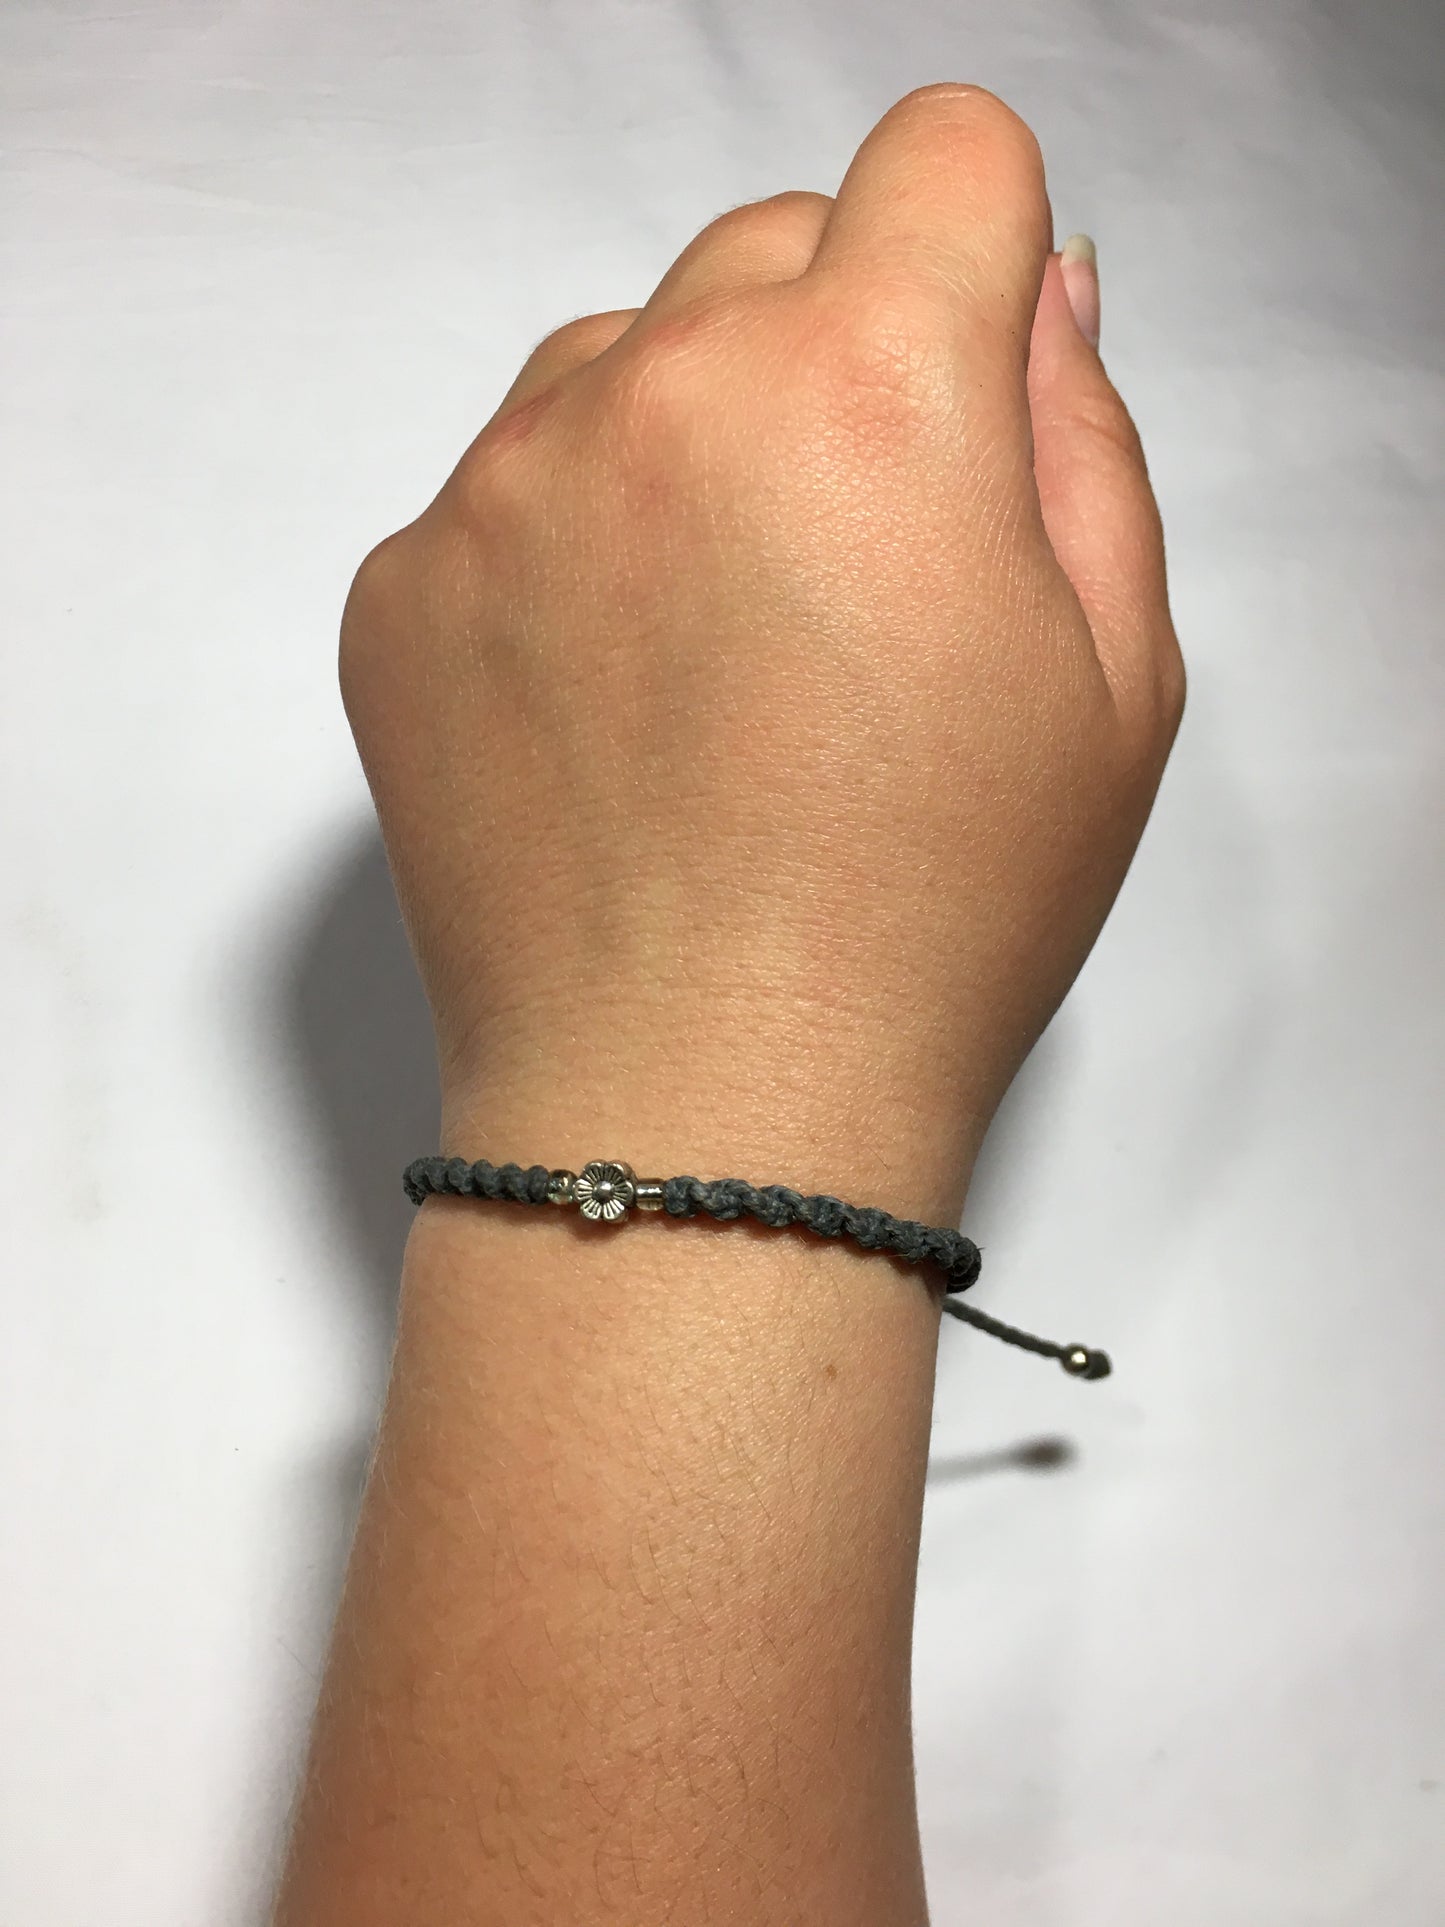 Roped Bracelet - Flower Pendant with wax cord bracelet